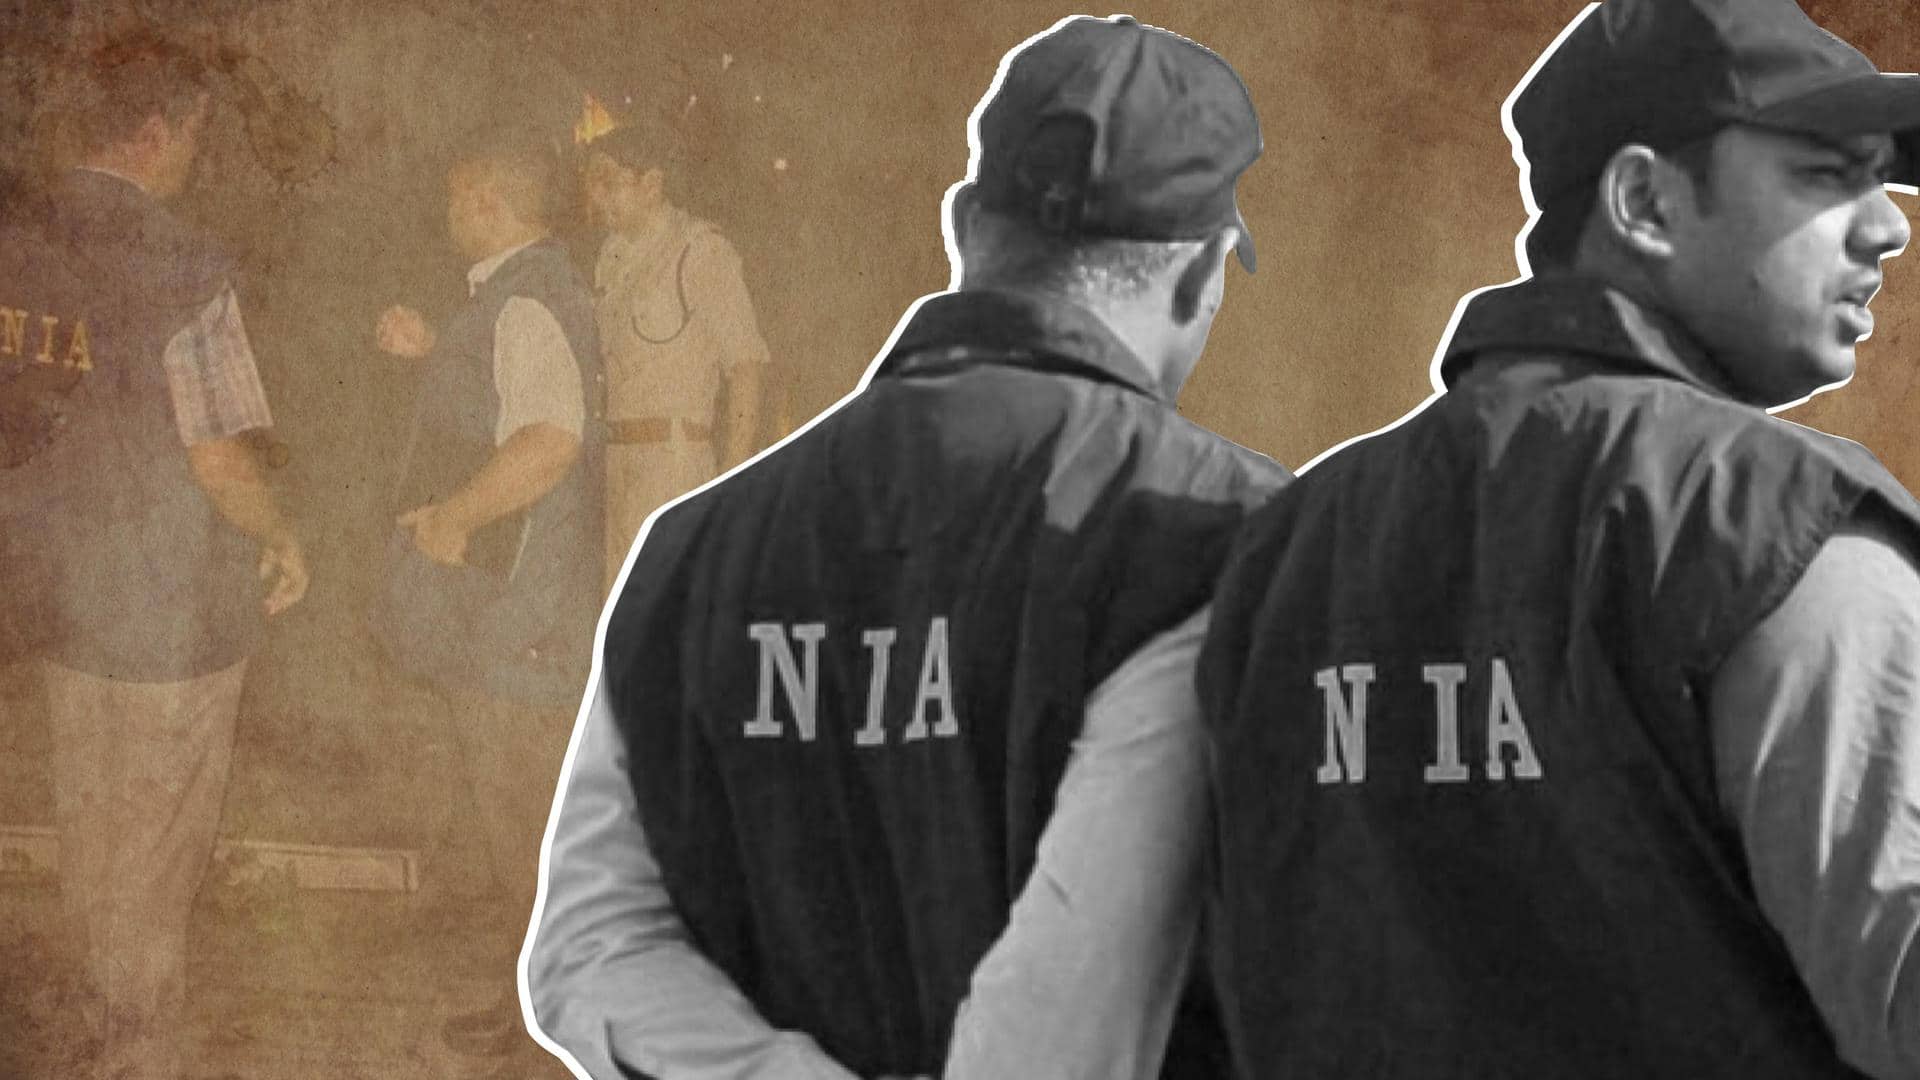 Gangster-terror nexus: NIA raids 72 locations across 7 states